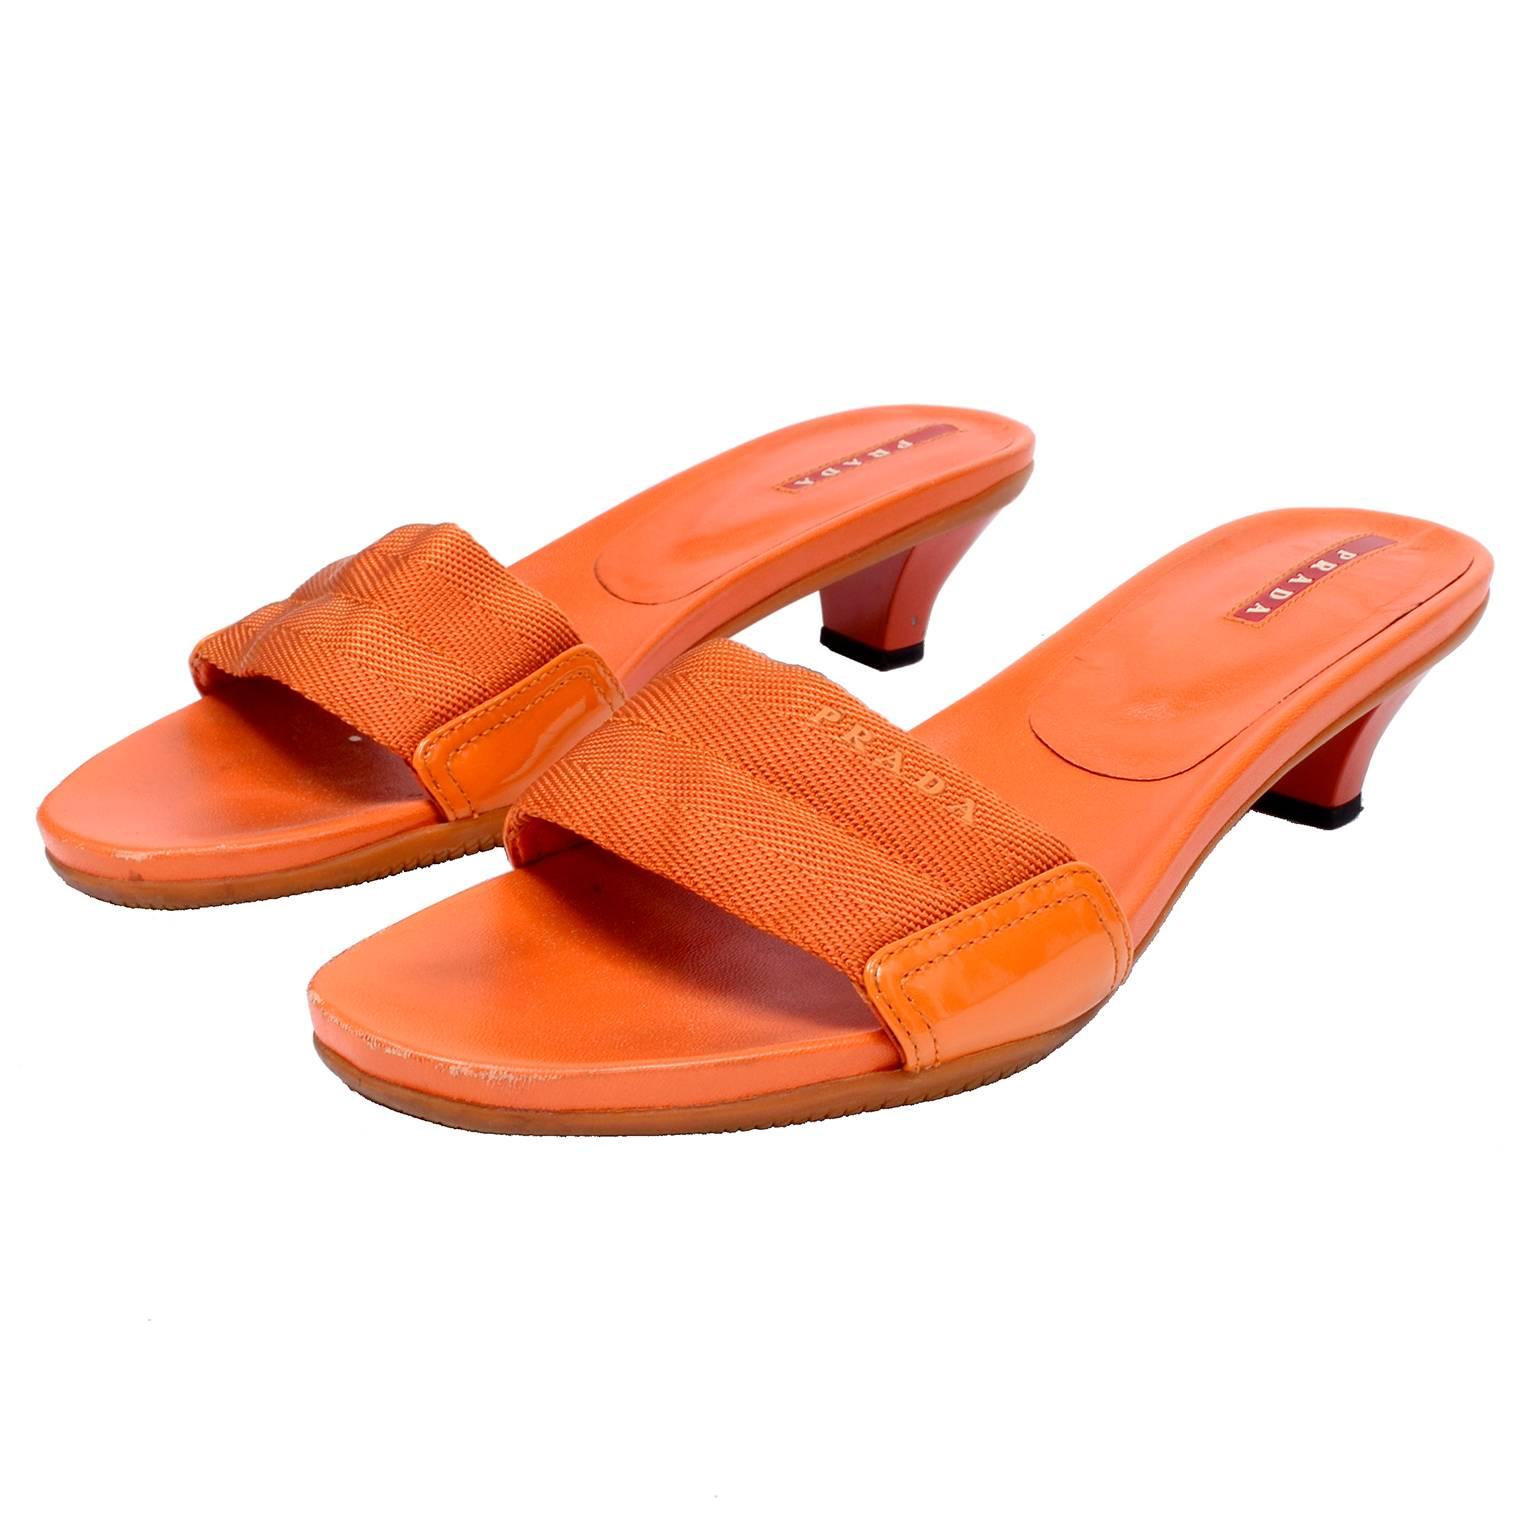 Orange Prada Shoes Slip on Summer Sandals Size 38 Logo Webbing & Rubber Soles